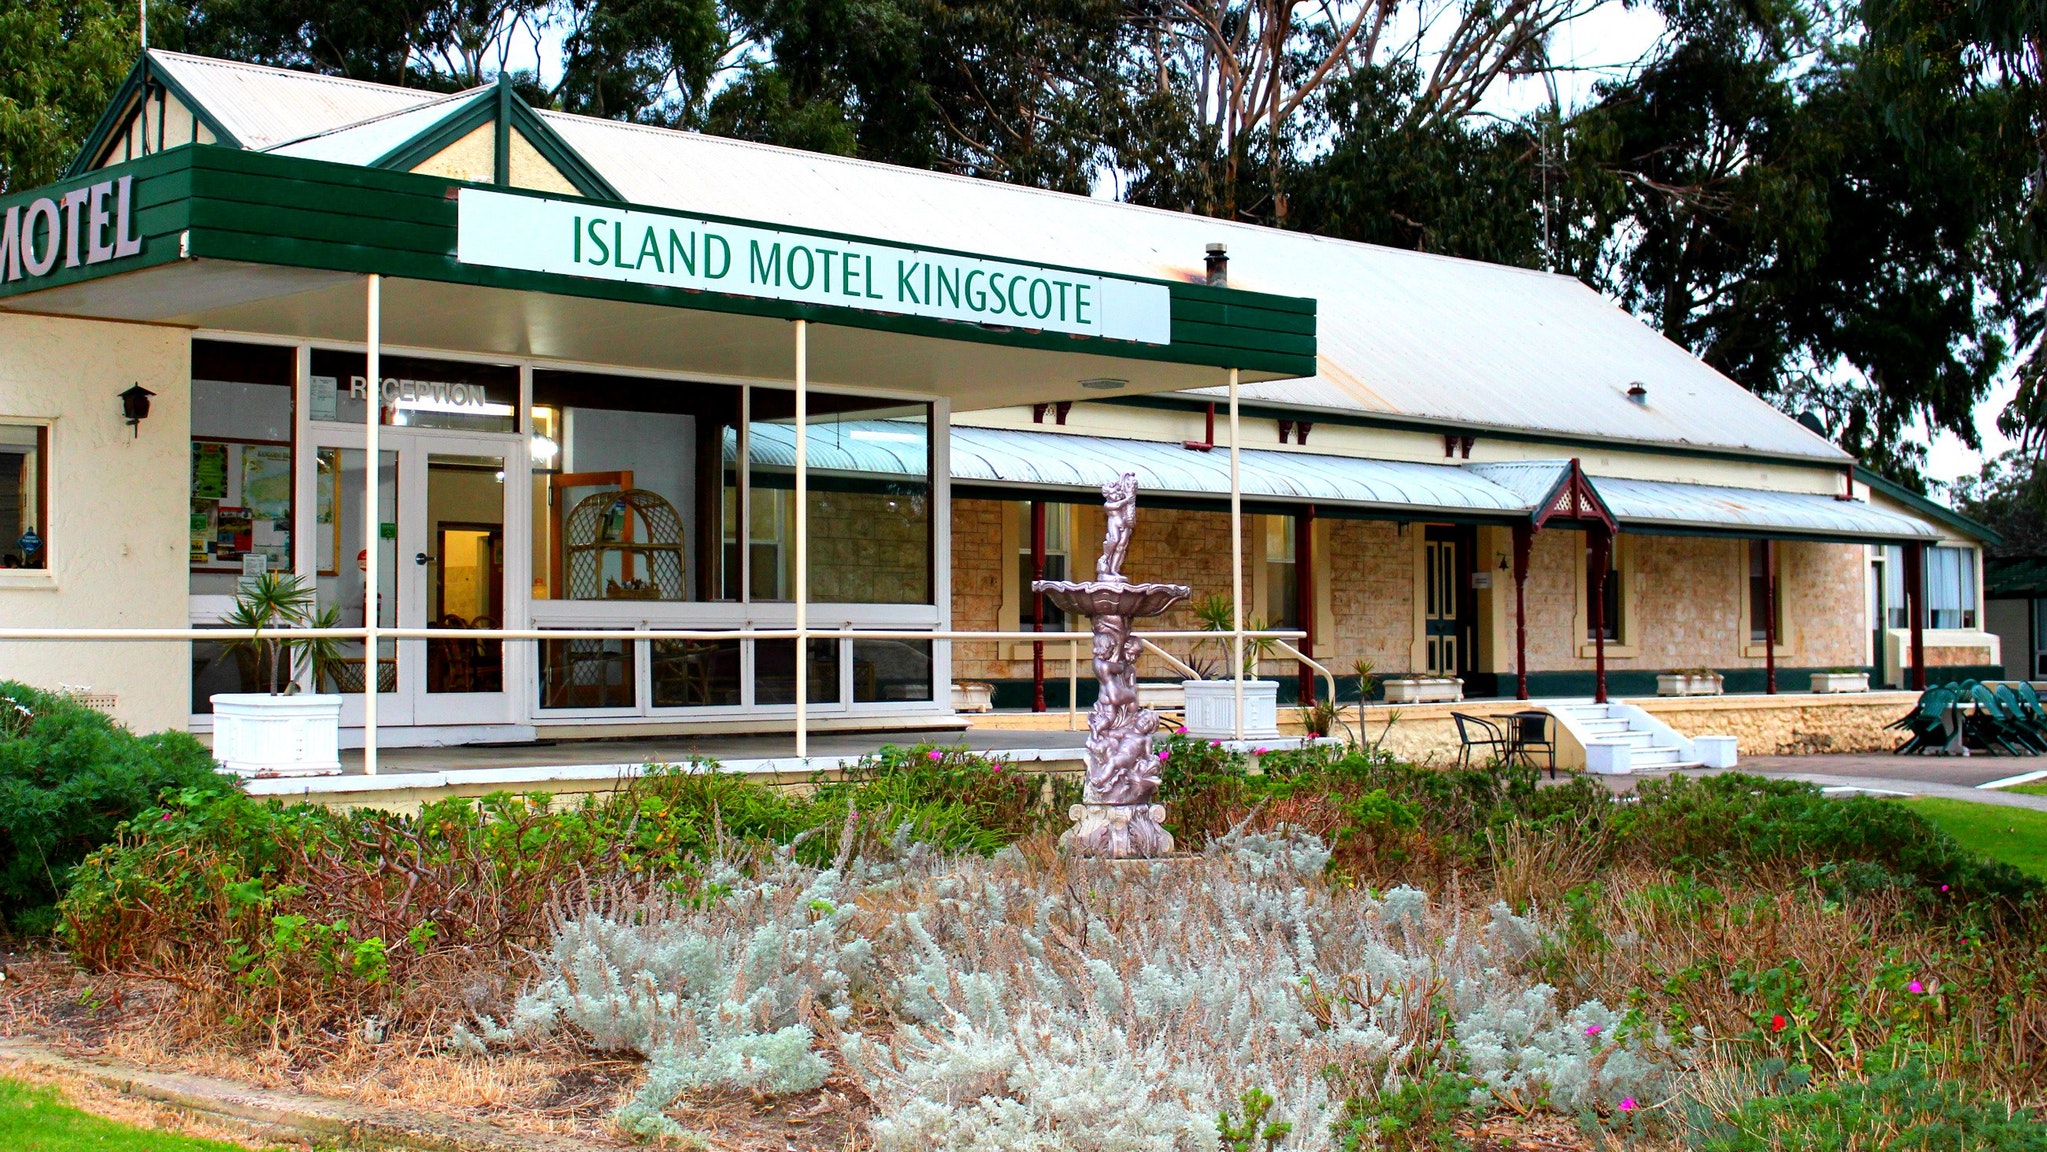 Island Motel Kingscote - Accommodation Mt Buller 5